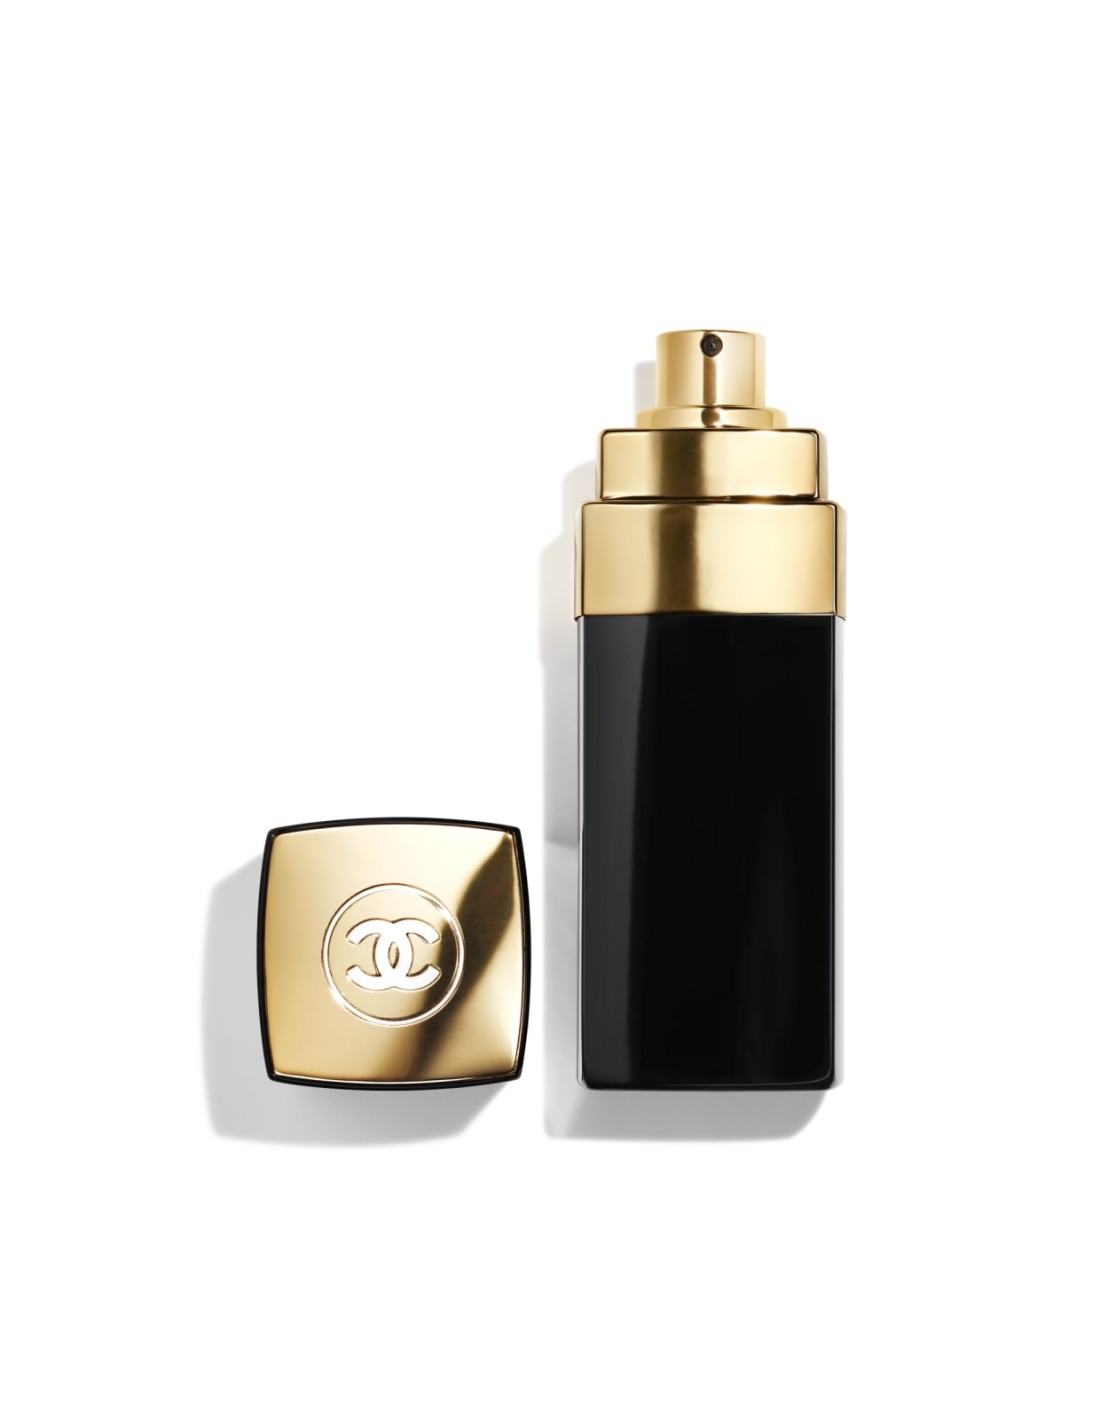 Chanel n° 5 Eau de Toilette spray Ricaricabile Profumo donna Offerta